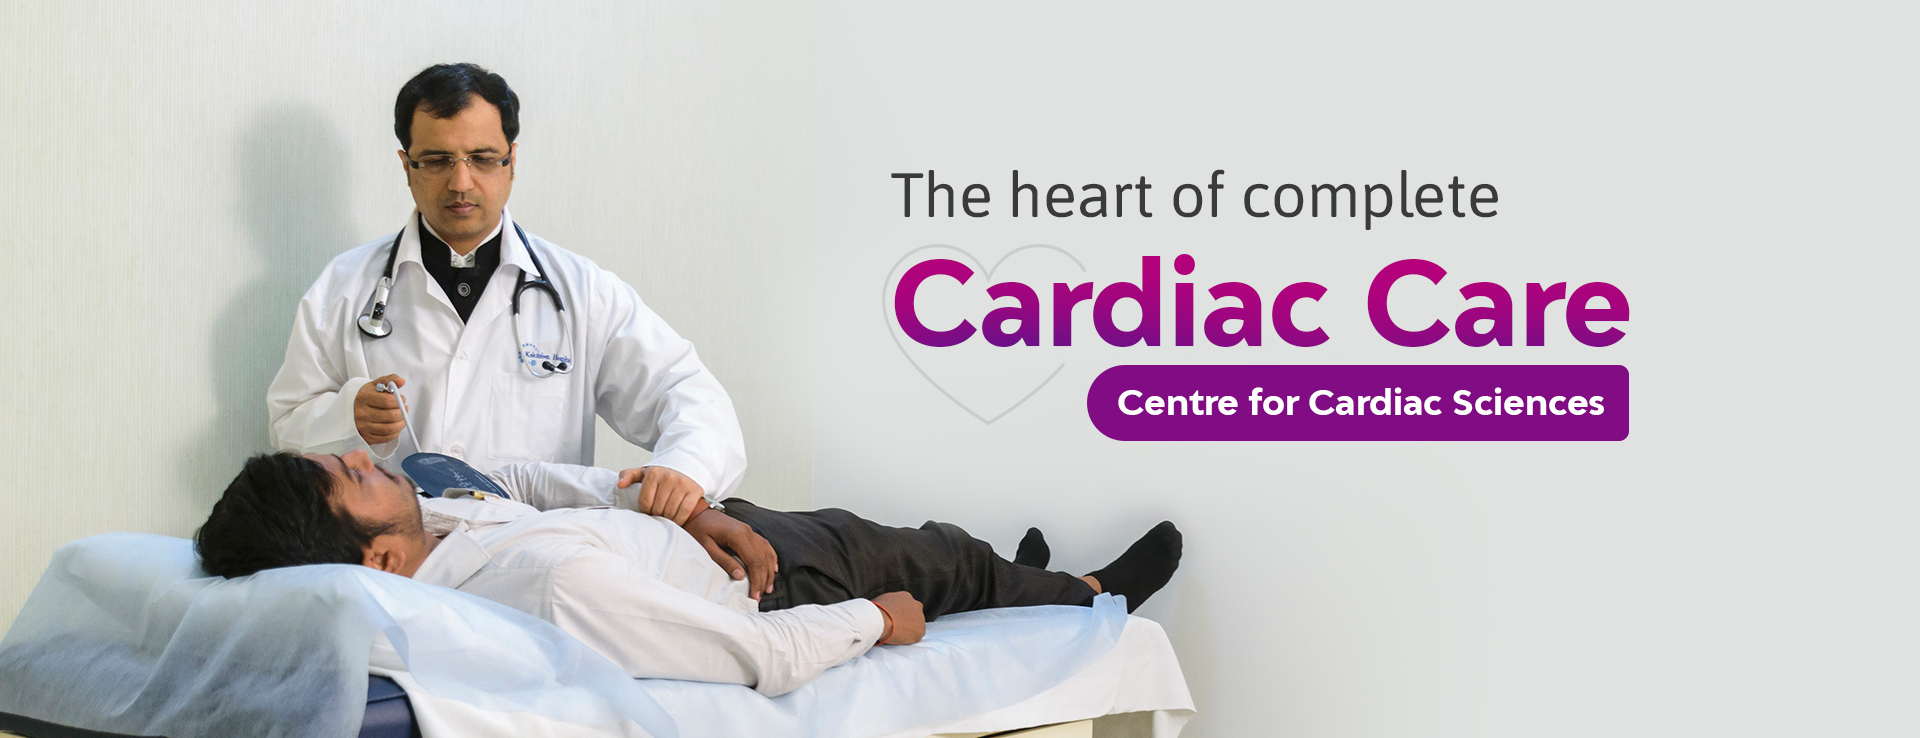 The heart of complete Cardiac Care - Center for Cardiac Scinces